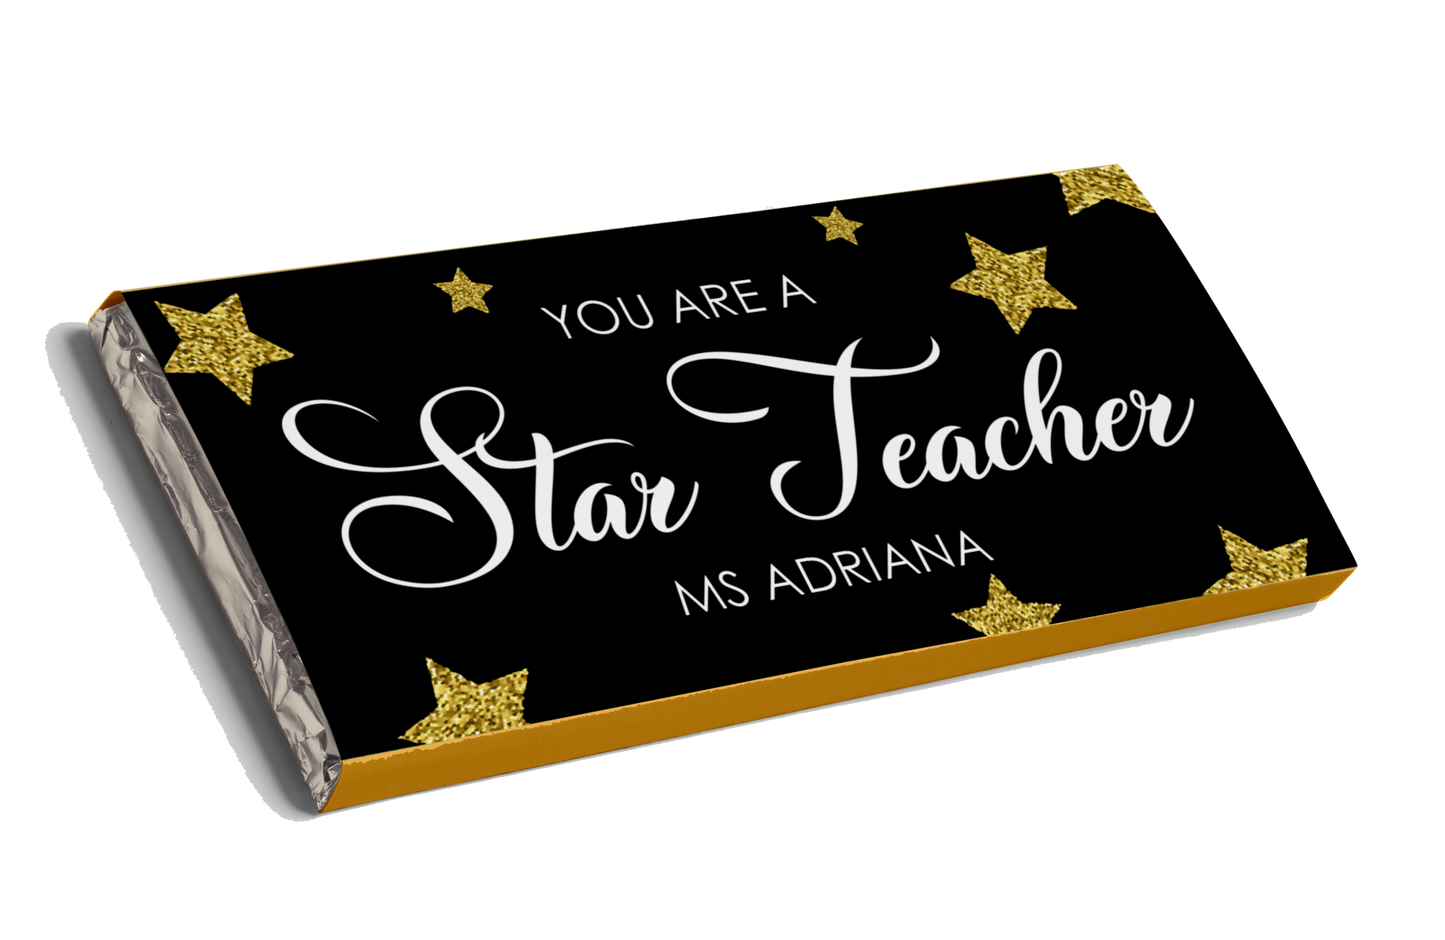 Star Teacher Chocolate Bar